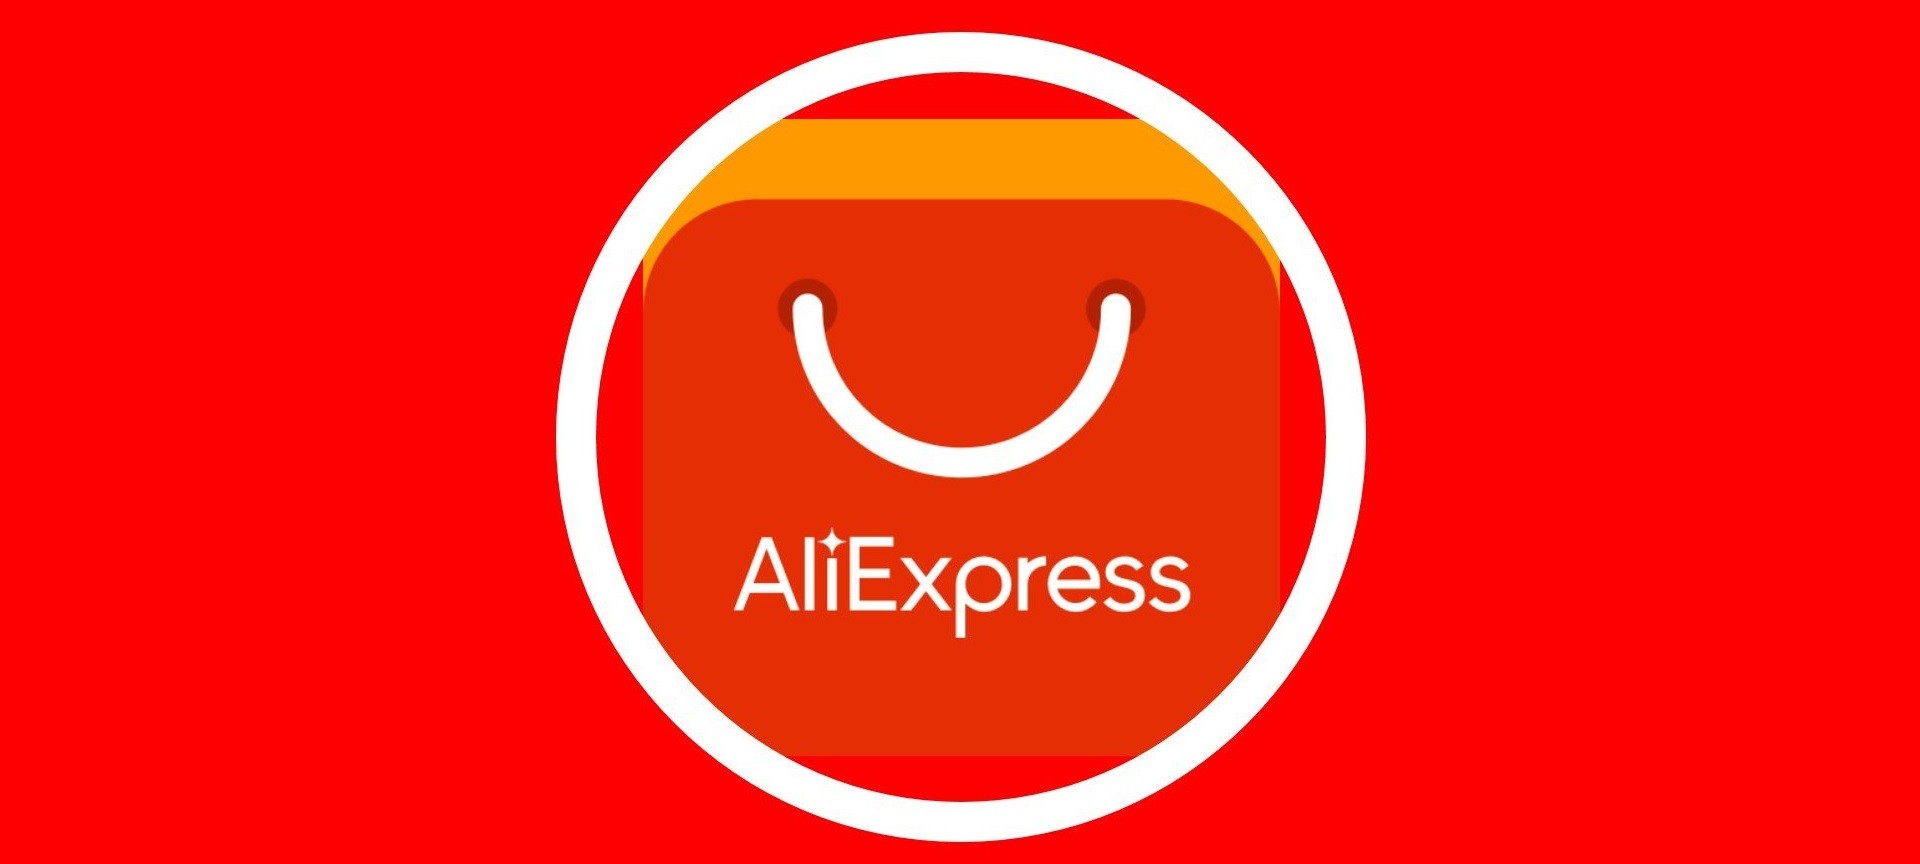 Abril 2019 Brasil Logotipo Aliexpress Dispositivo Móvel Aliexpress